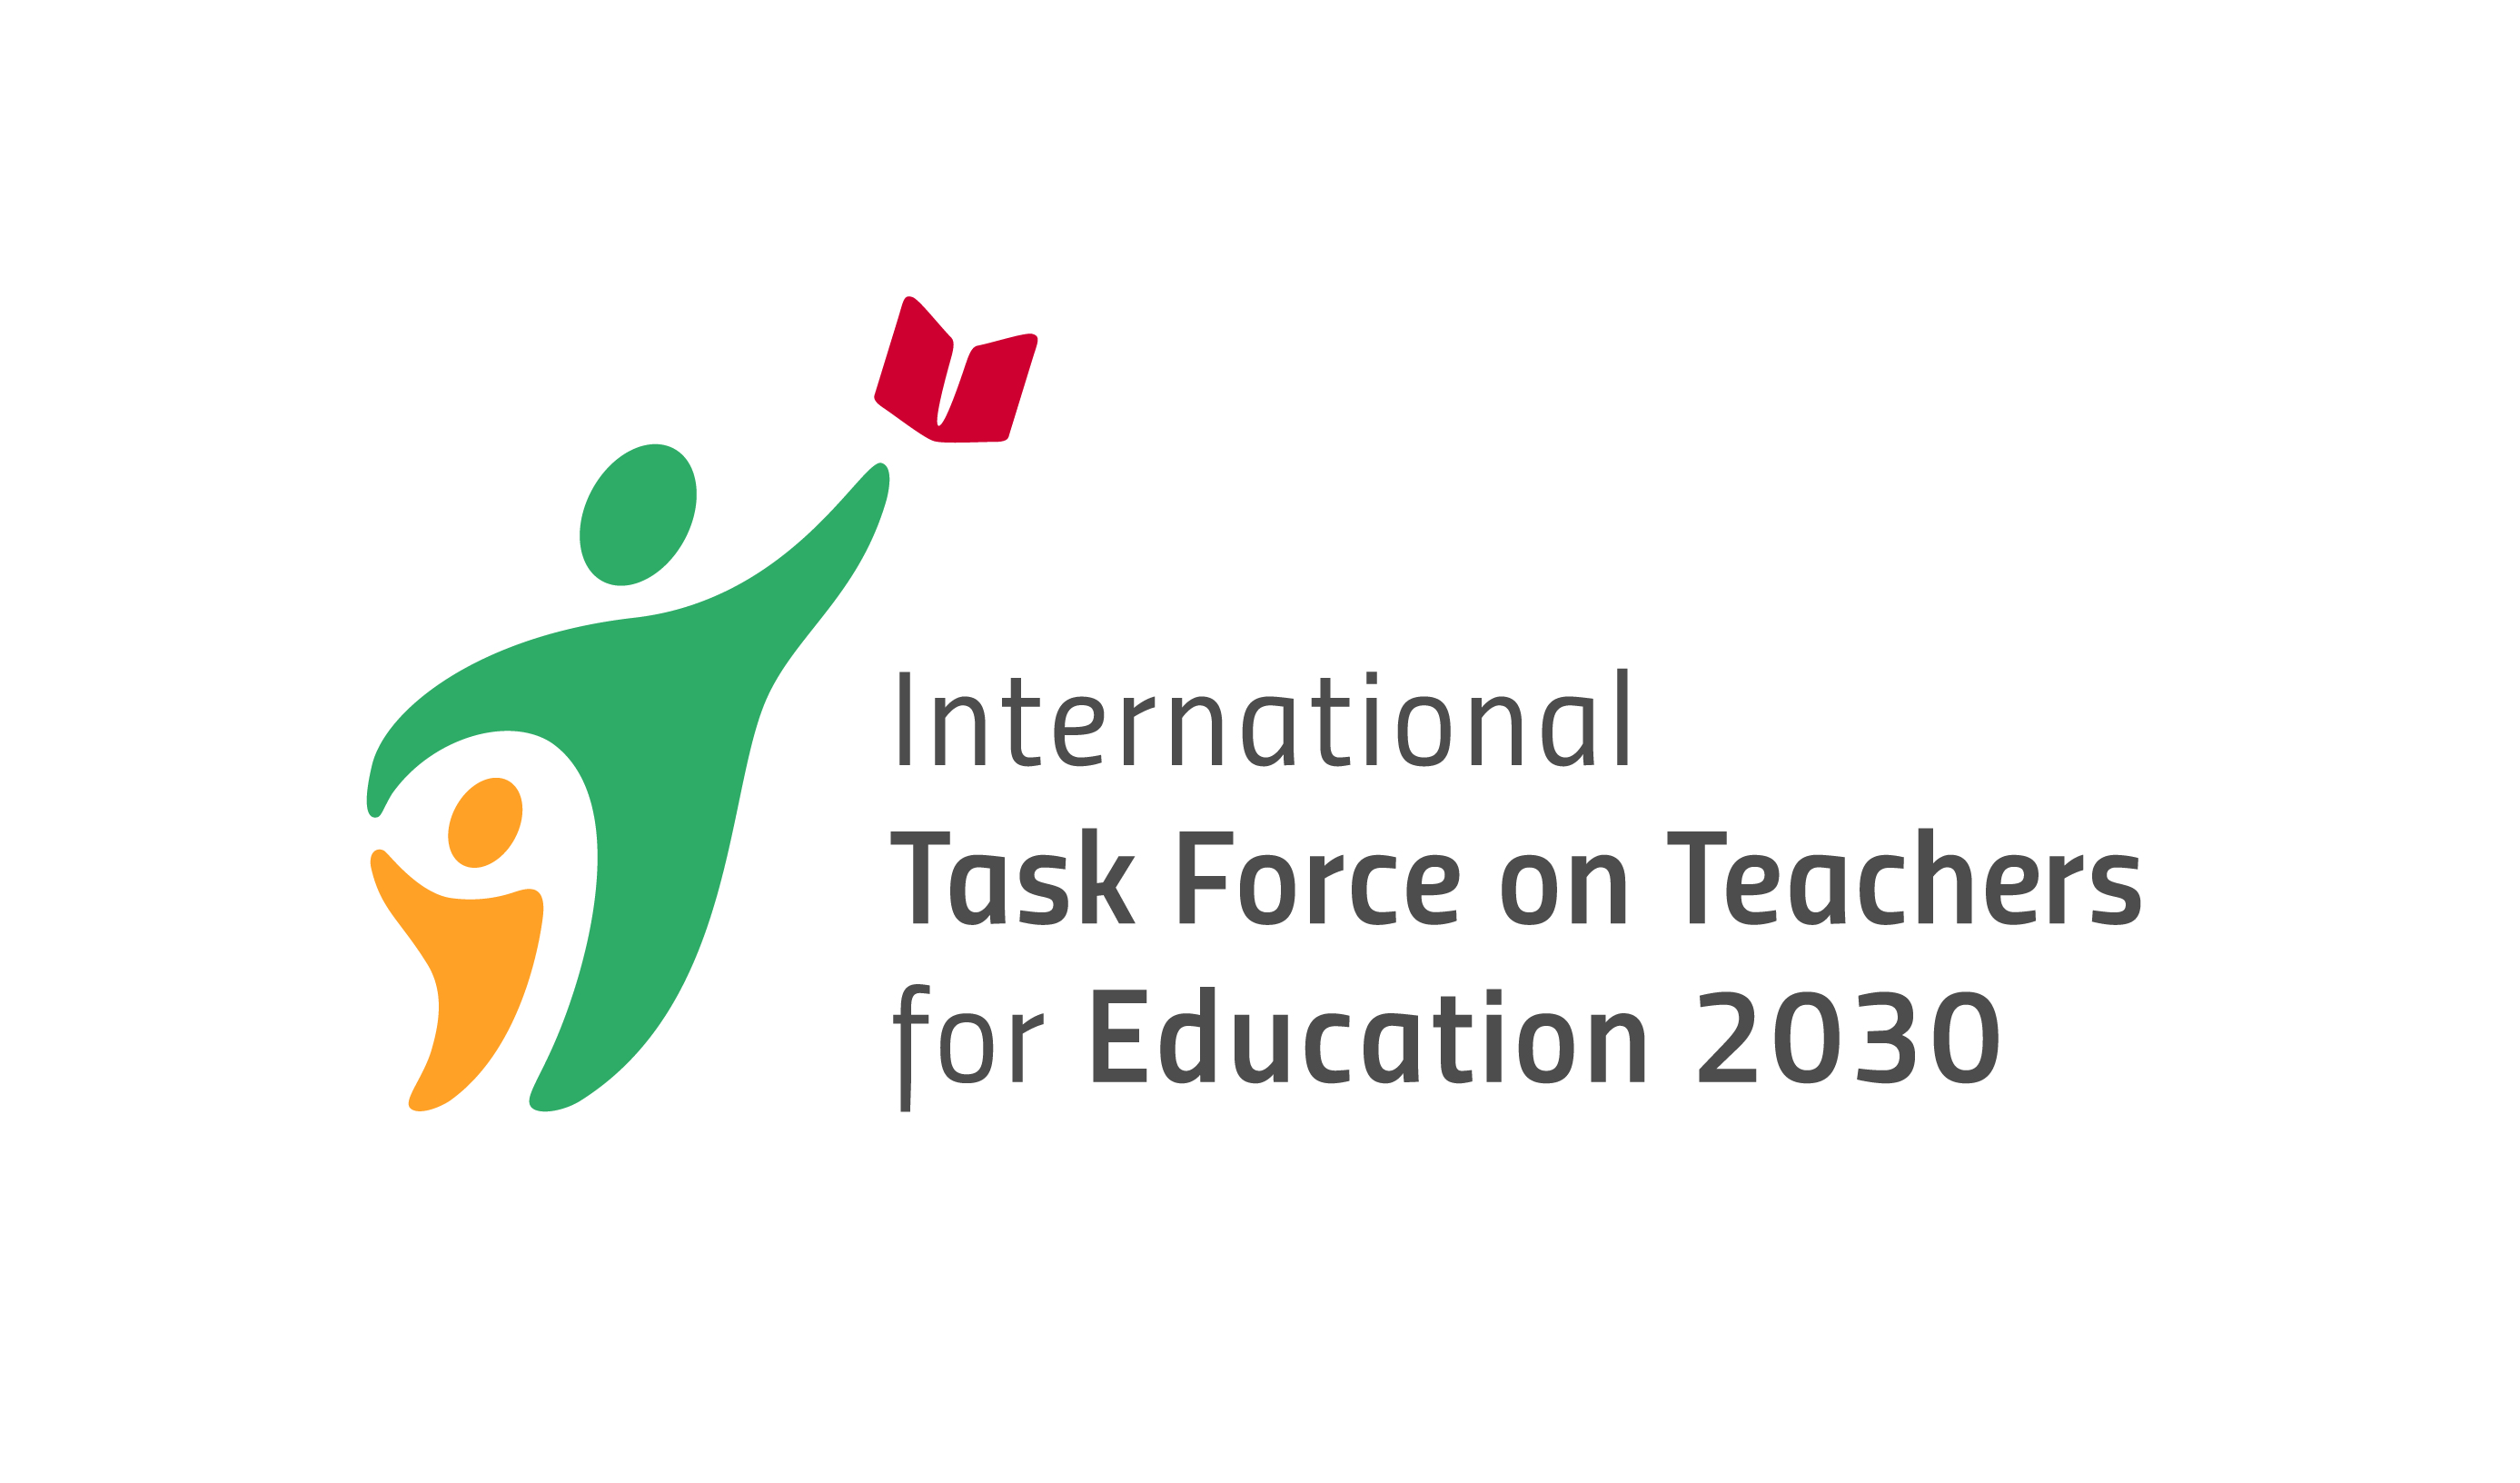 UNESCO International Task Force on Teachers for Education 2030